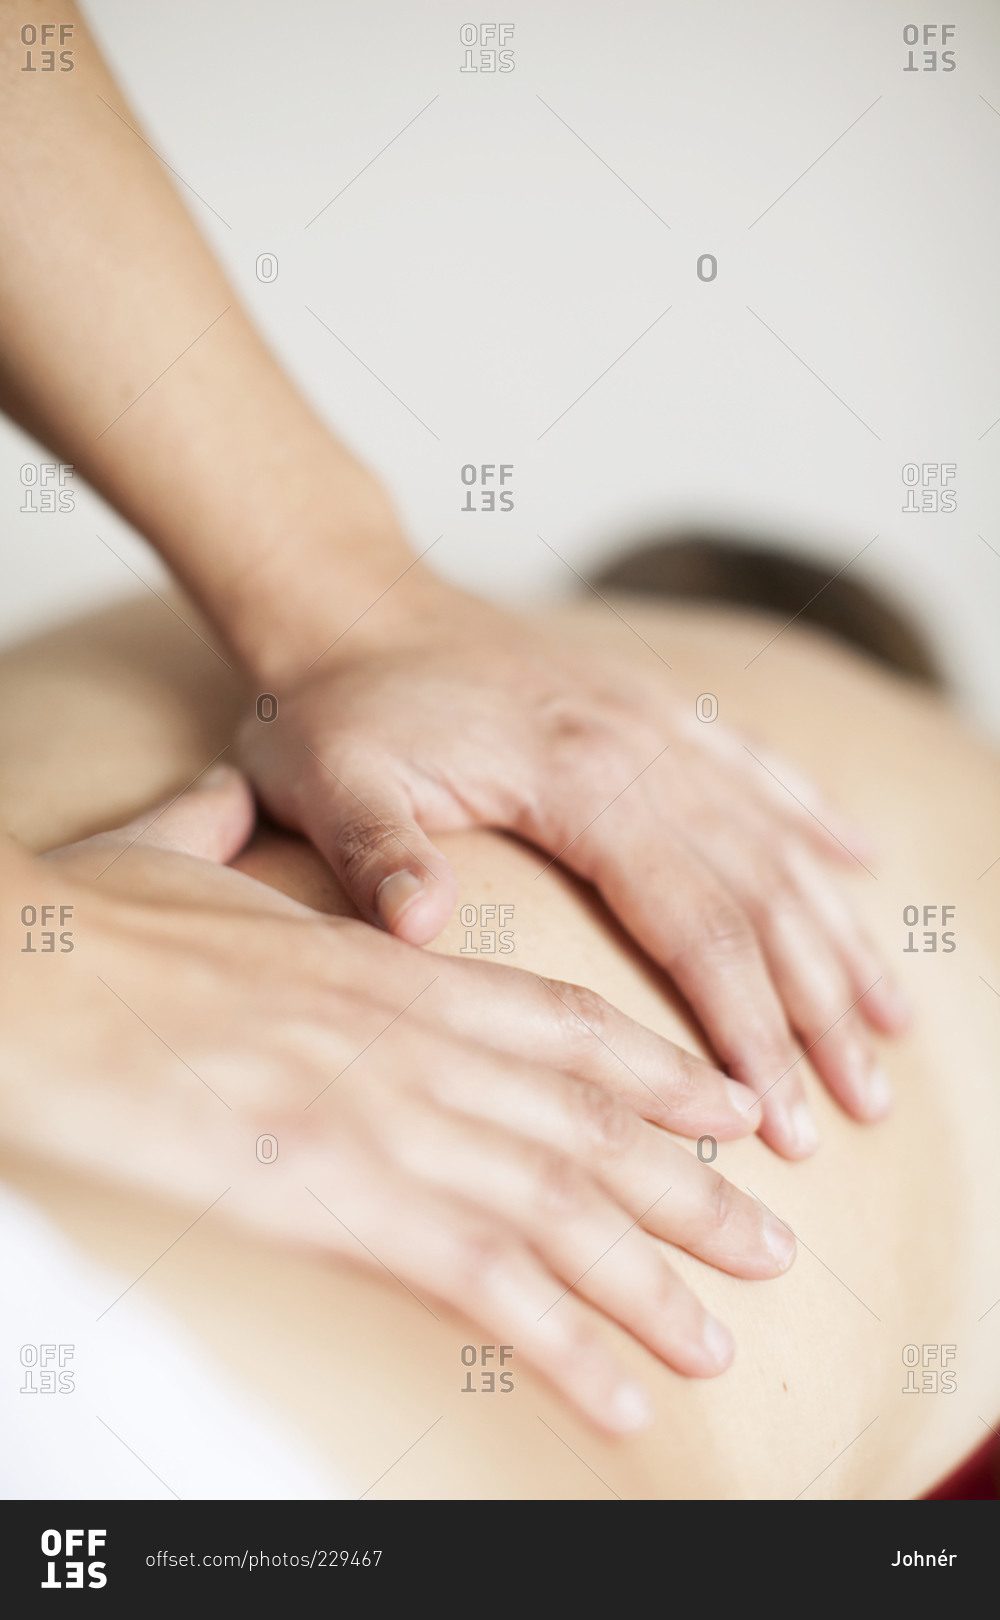 Hands giving a back massage